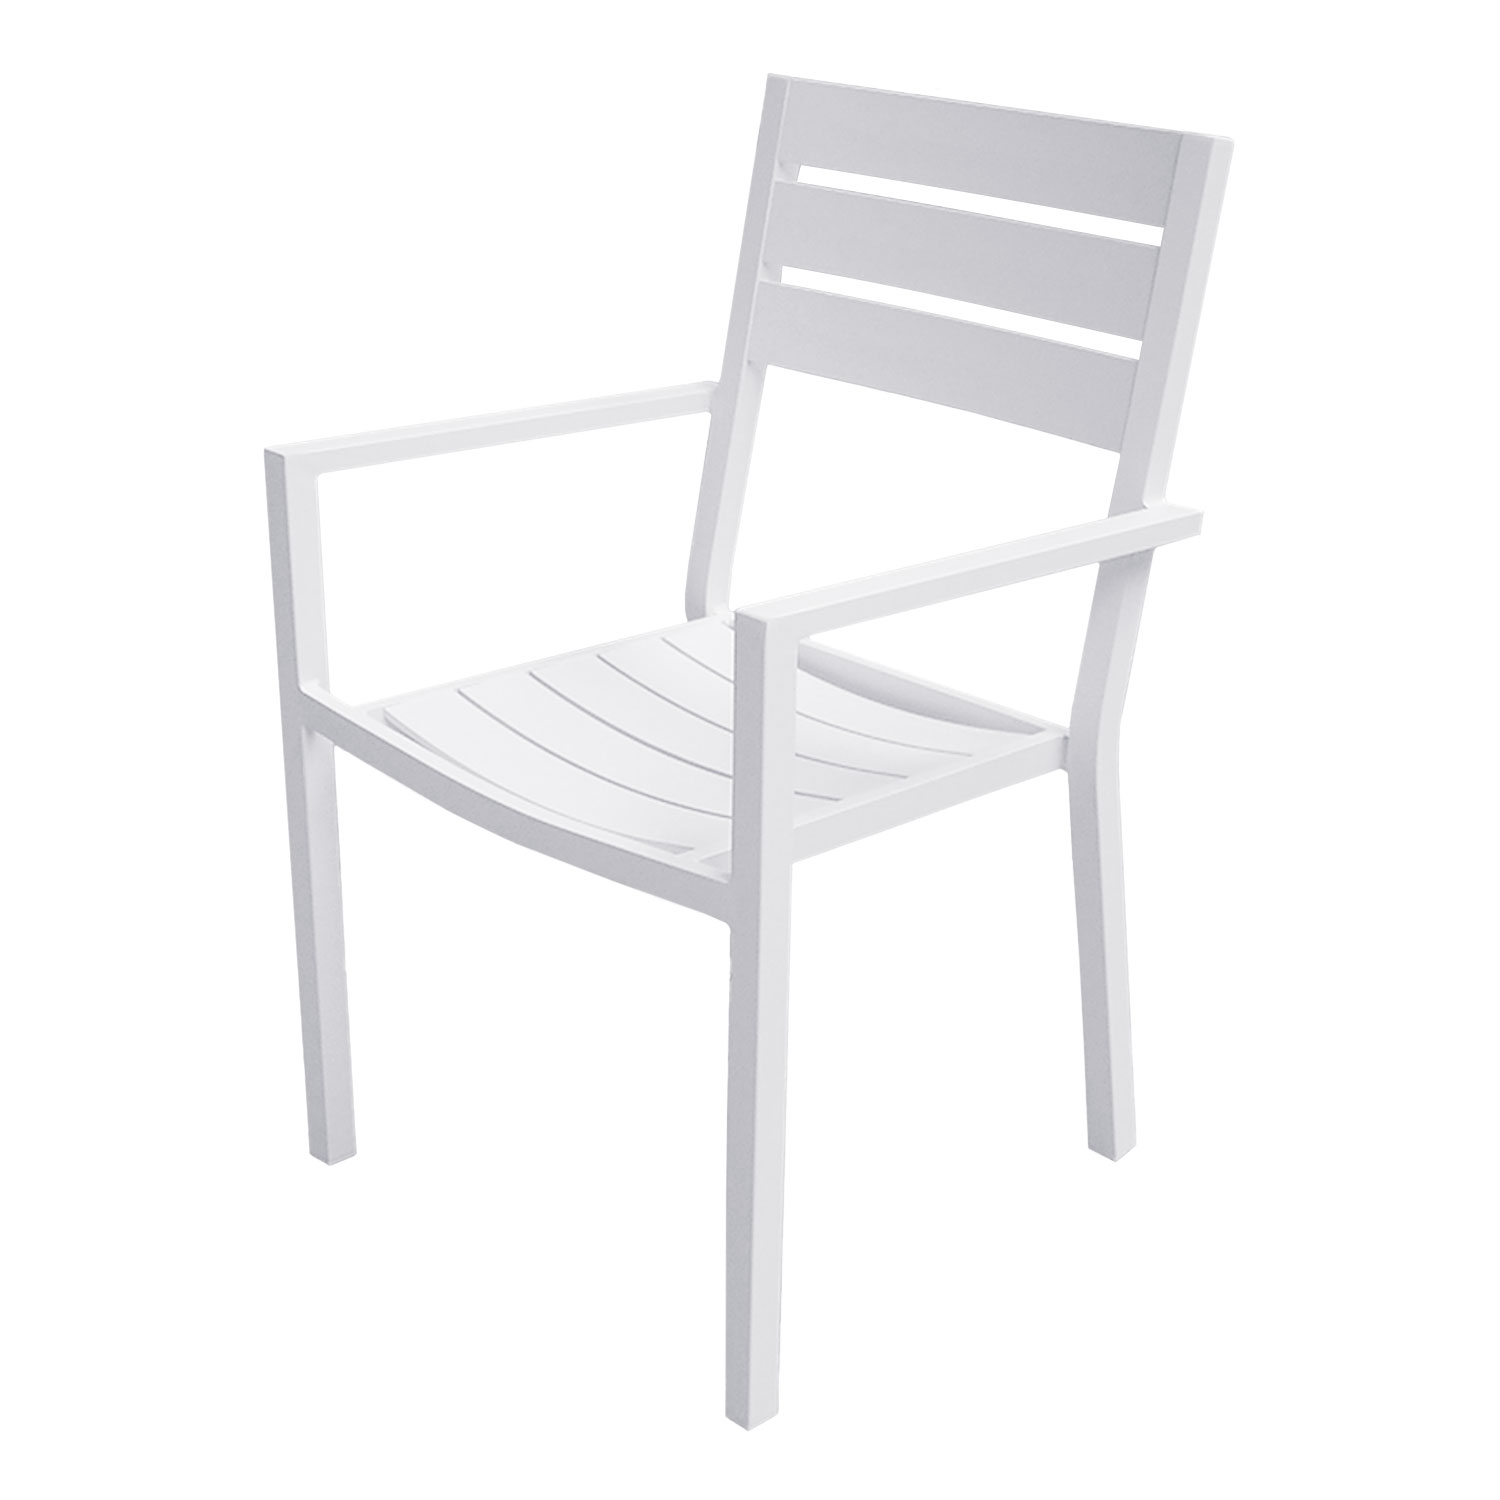 Gartenmöbel VENEZIA ausziehbar 132/264 aus weißem Aluminium - 10 Sitzplätze